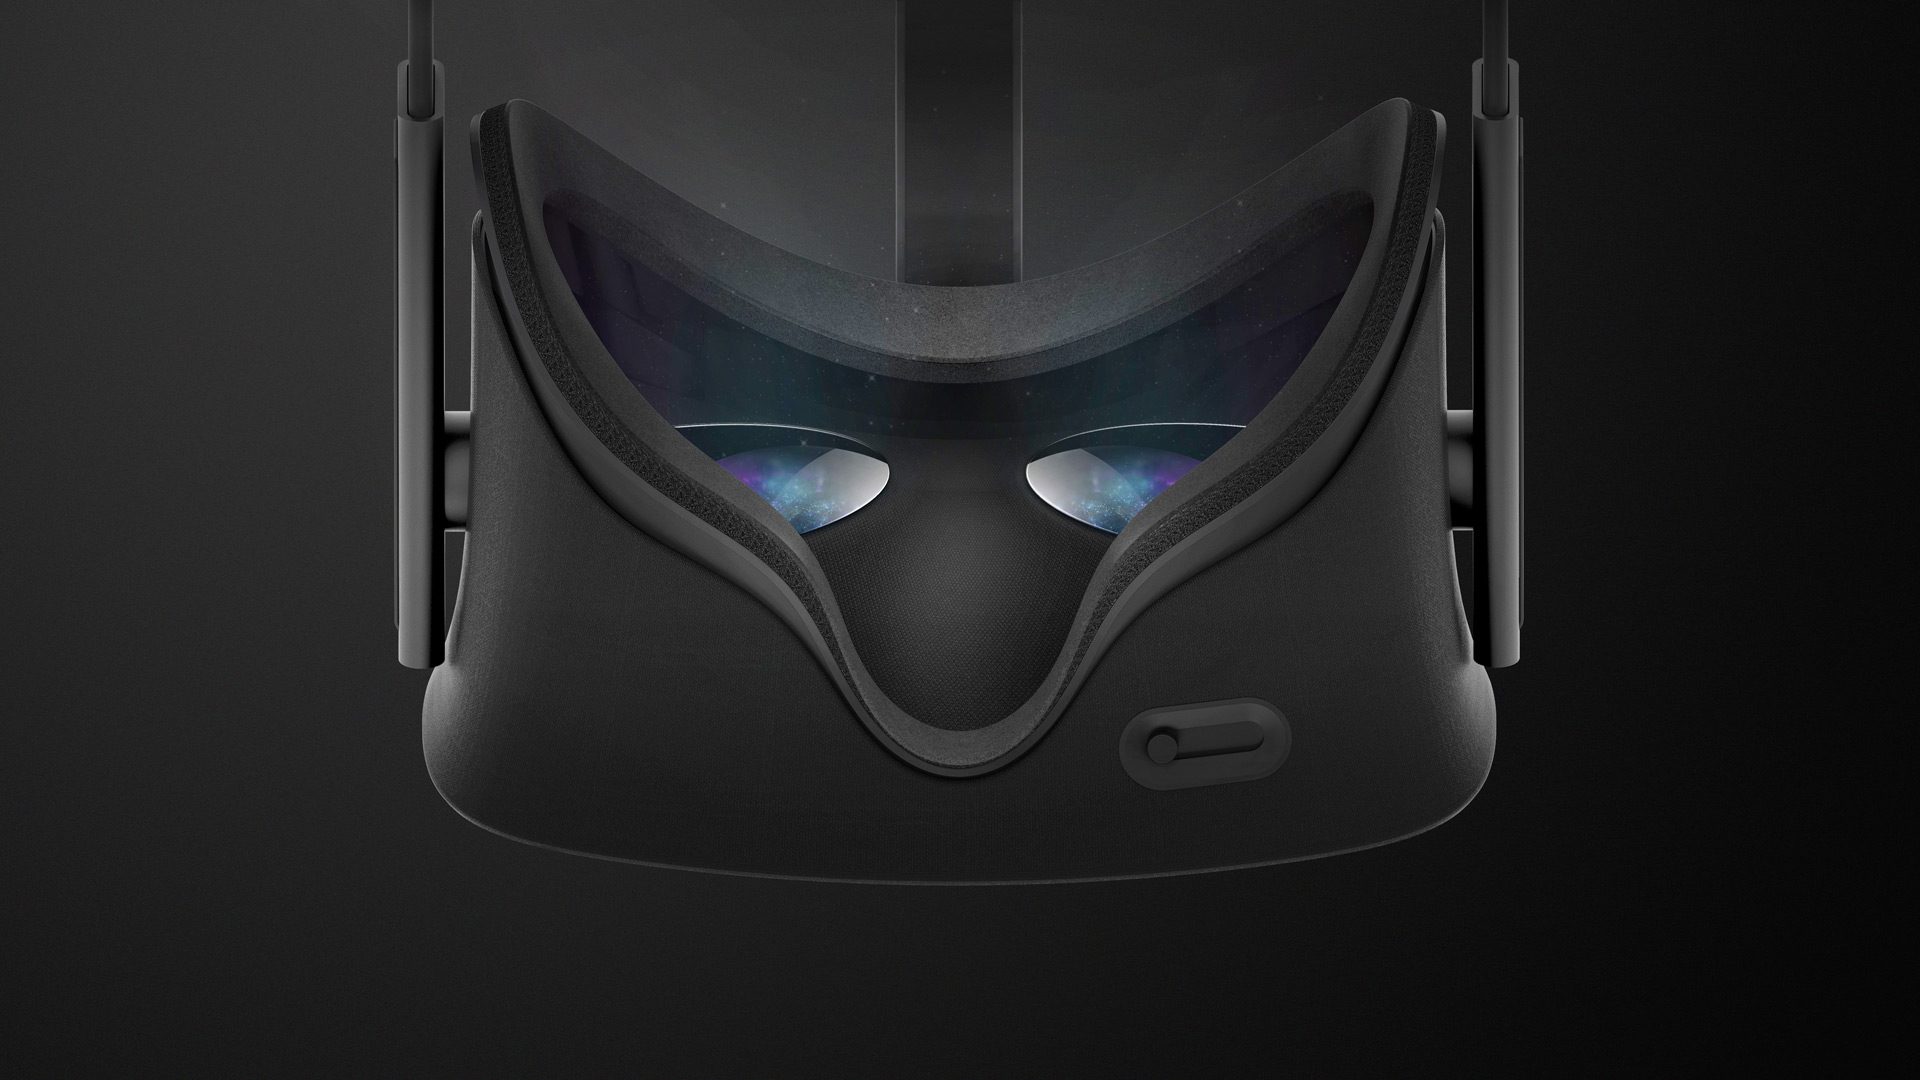 Oculus Rift CV1 High Res Photos Suggest a Lighter, Comfortable Headset – Road VR